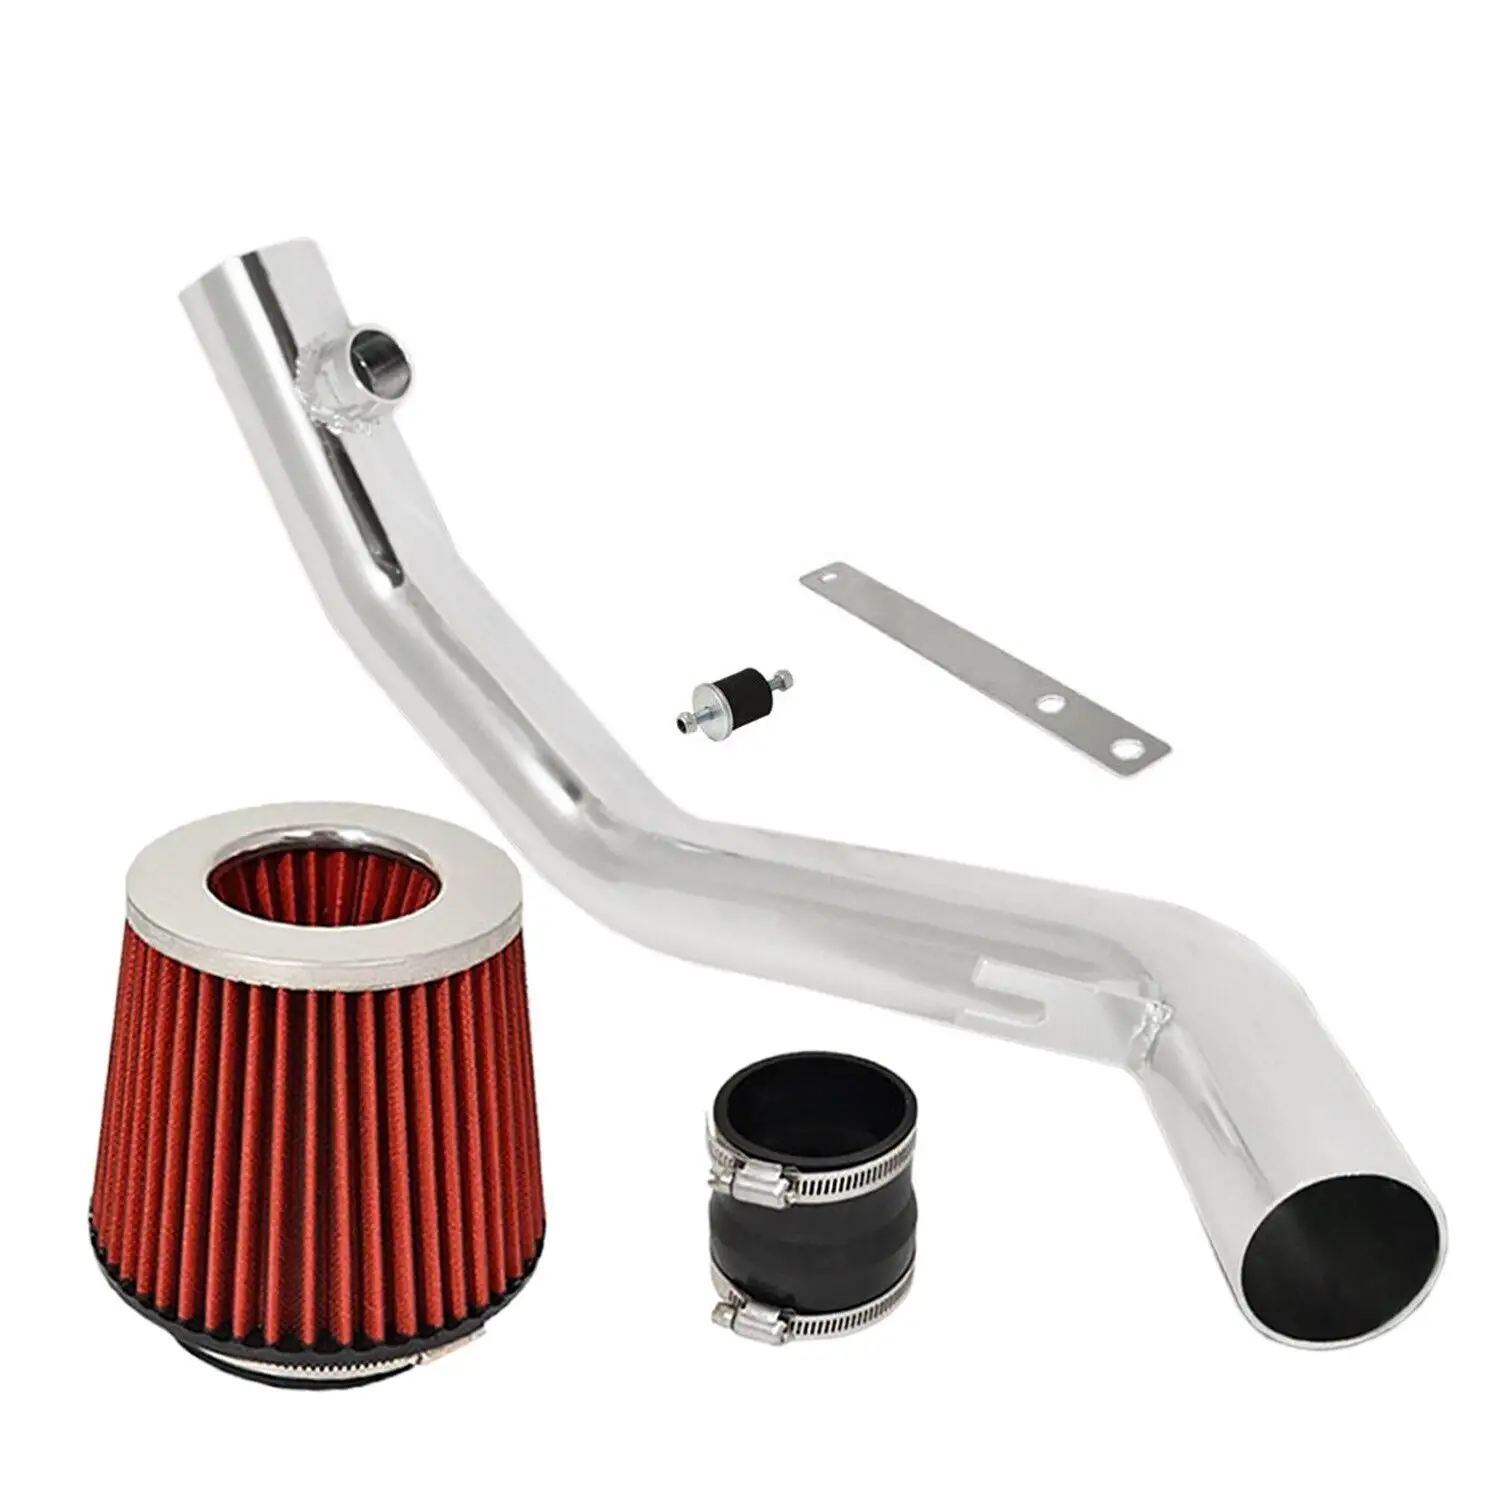 MAX Car Auto Pacing Parts Aluminum Turbo Pipe Air Intake Filter Kit For 98-04 WV Golf Jetta MK4 VR6 12V